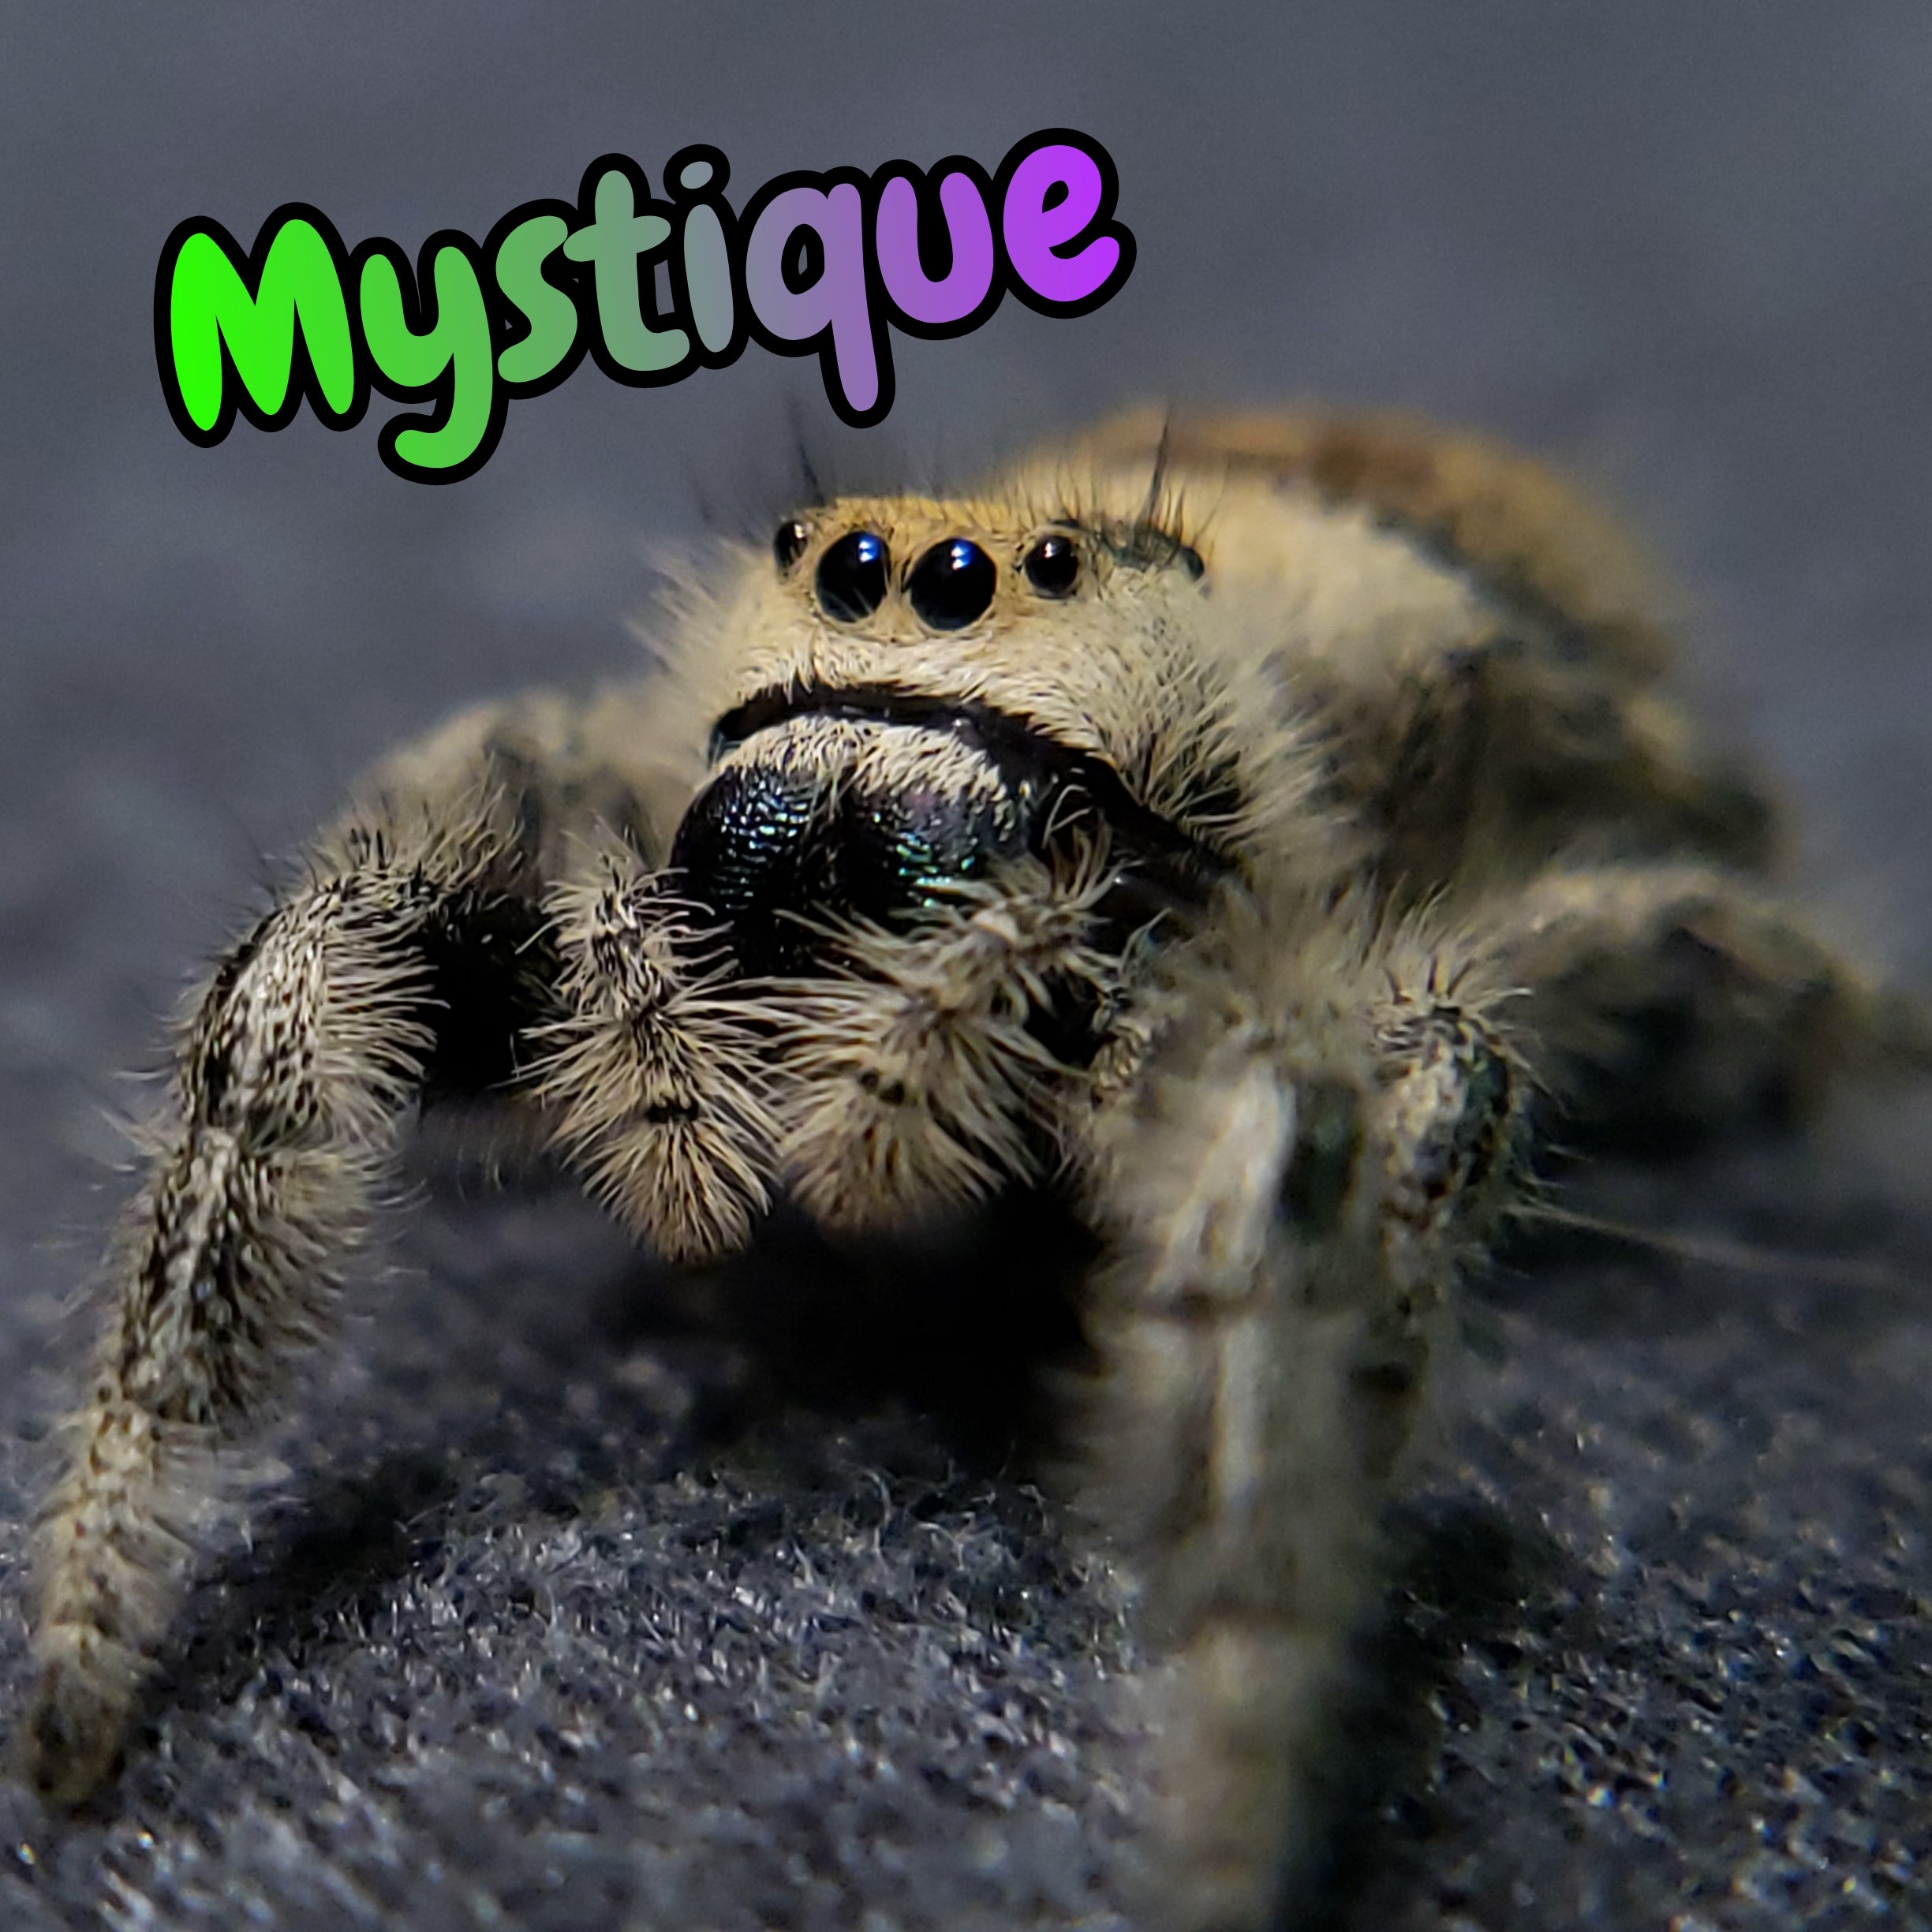 Regal Jumping Spider "Mystique"